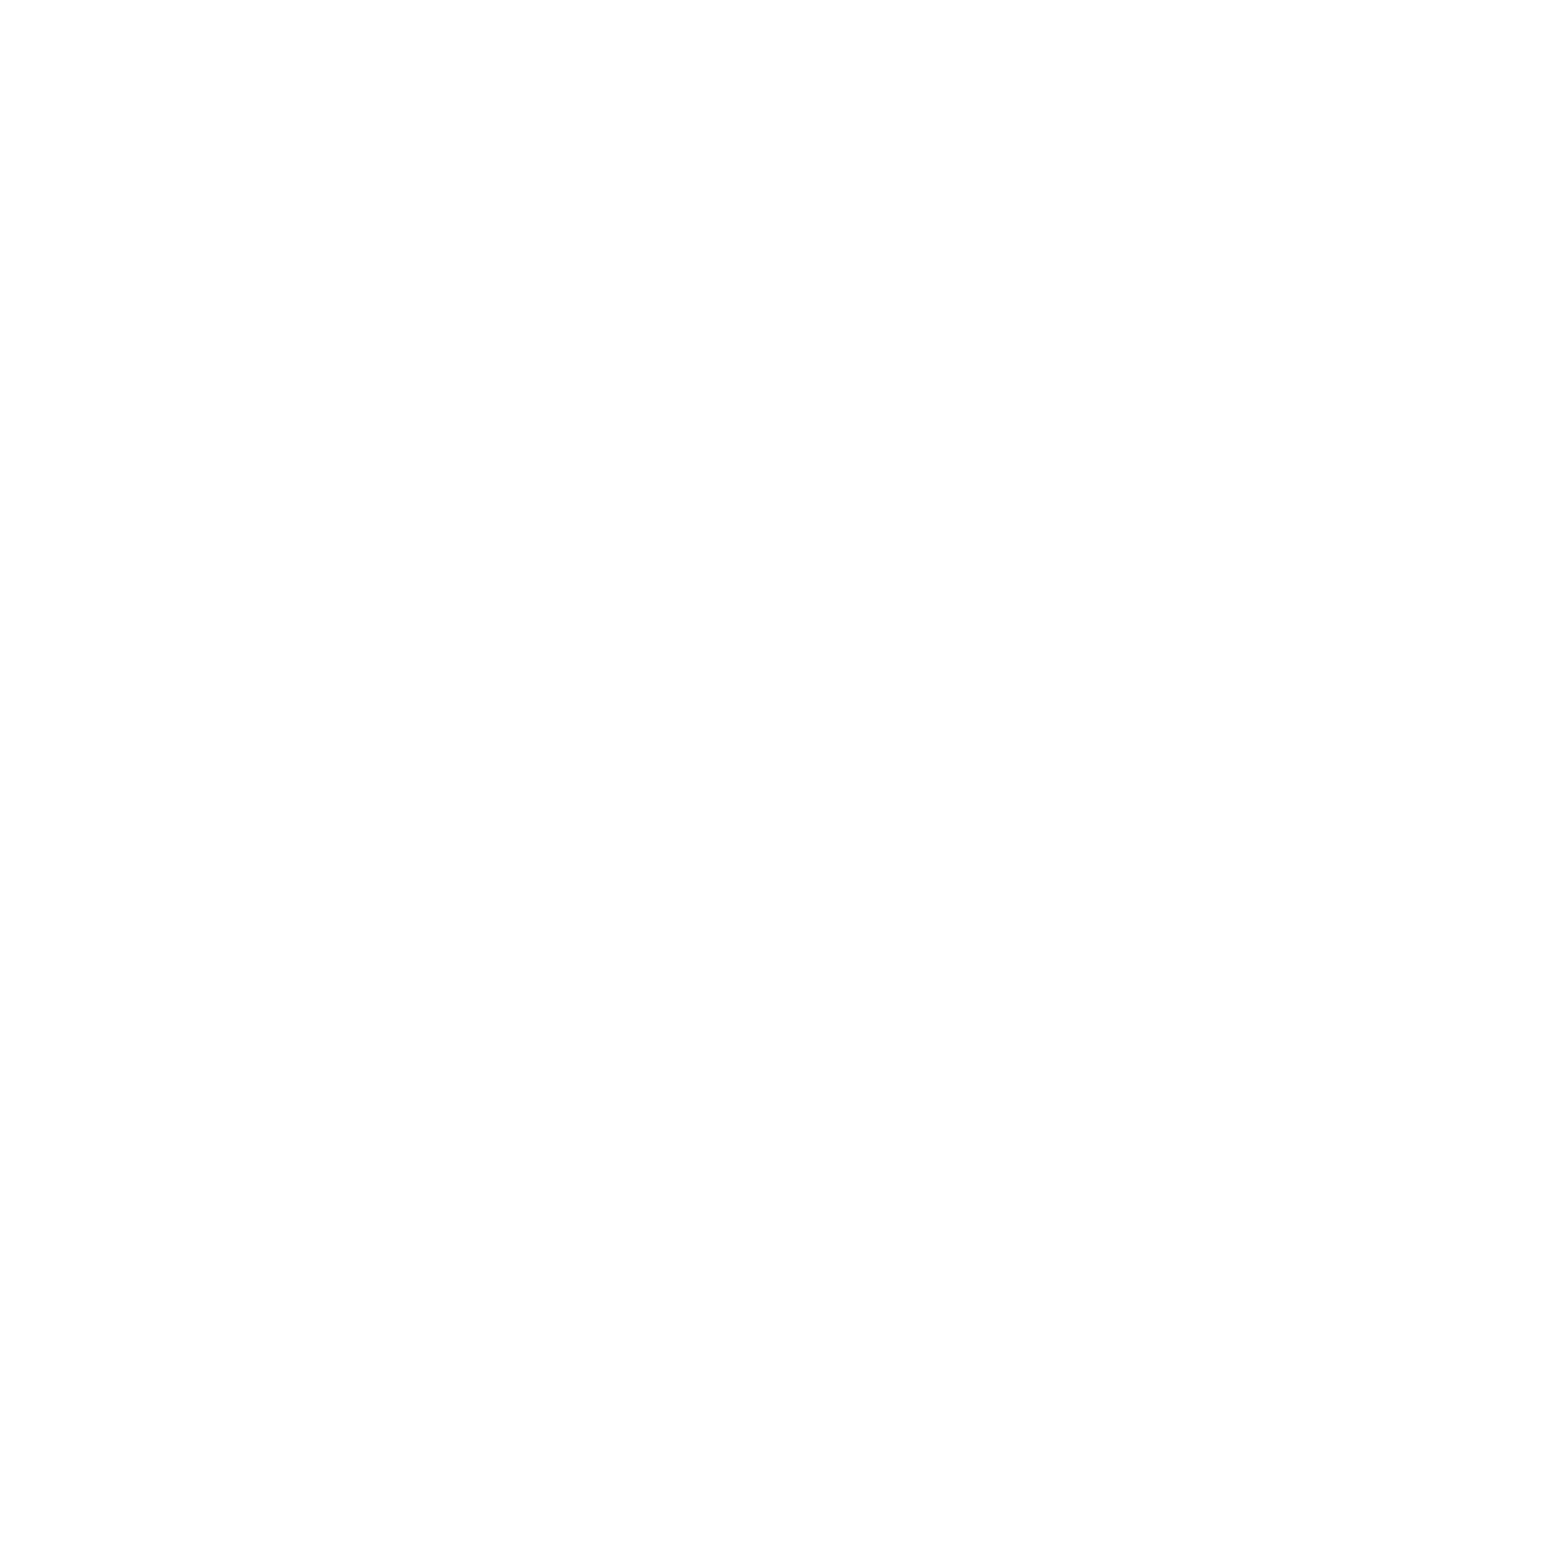 Winston (1)